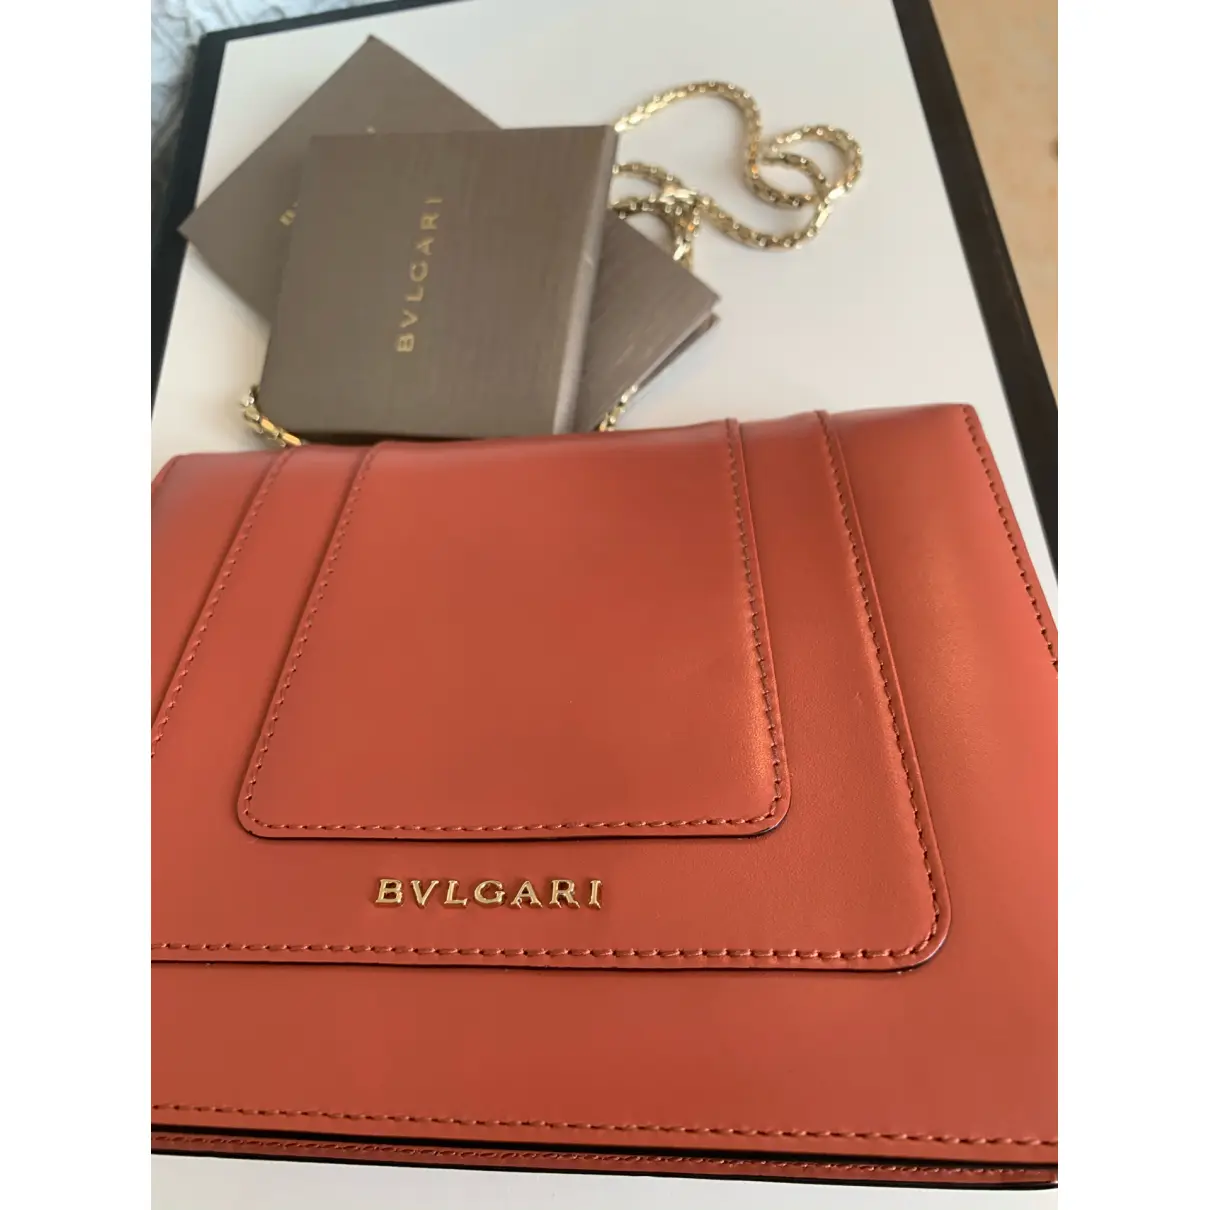 Buy Bvlgari Serpenti leather handbag online